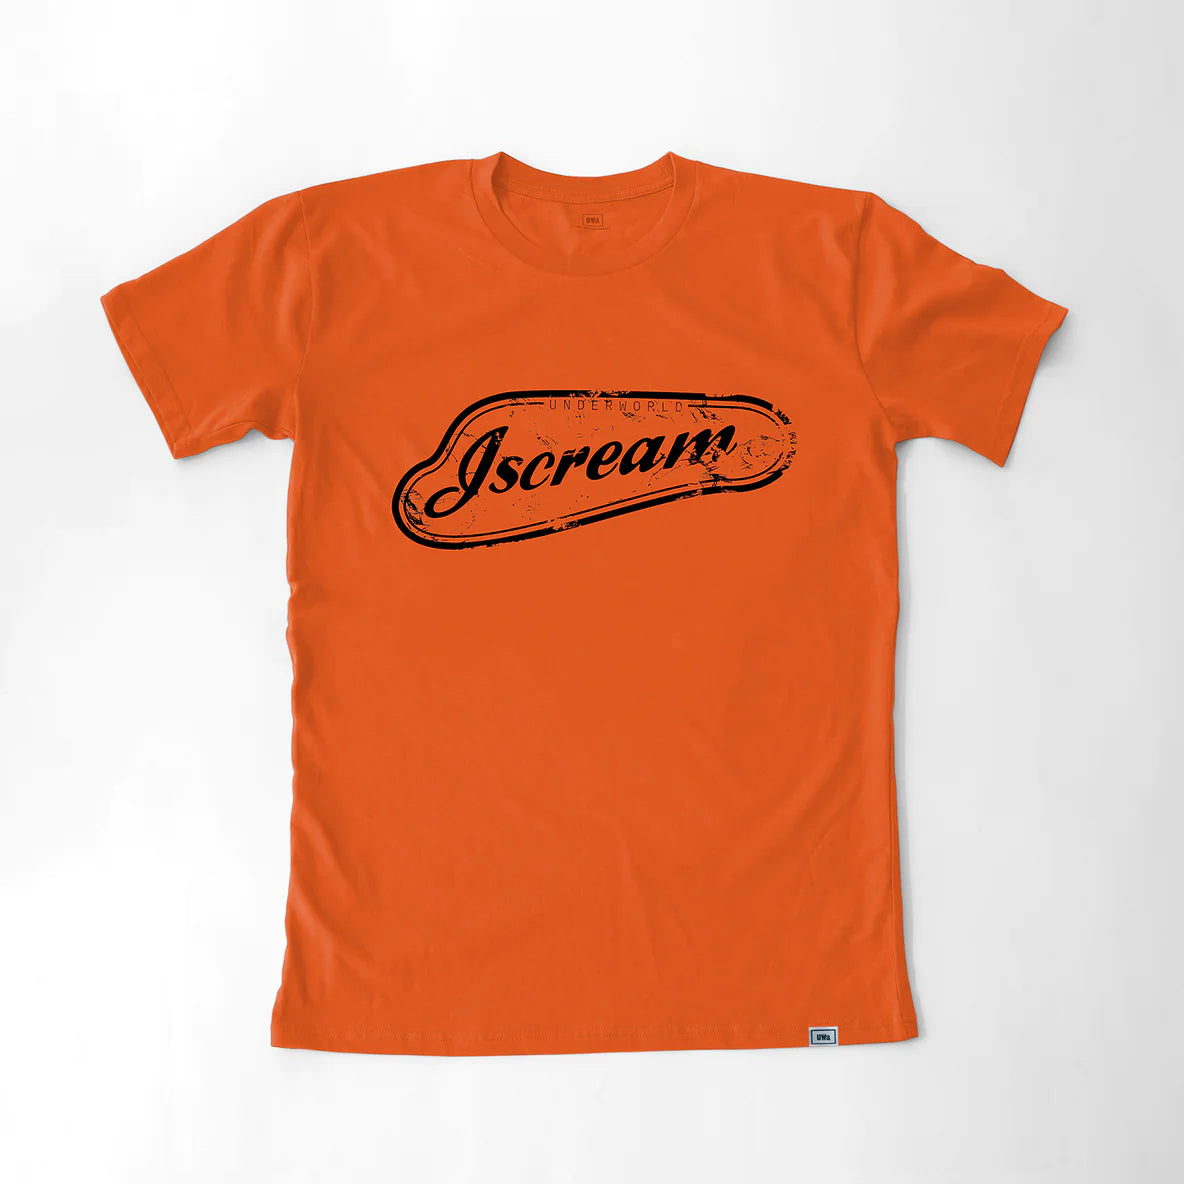 Underworld - *Cowgirl Limited Drop* Iscream Orange Tee Shirt